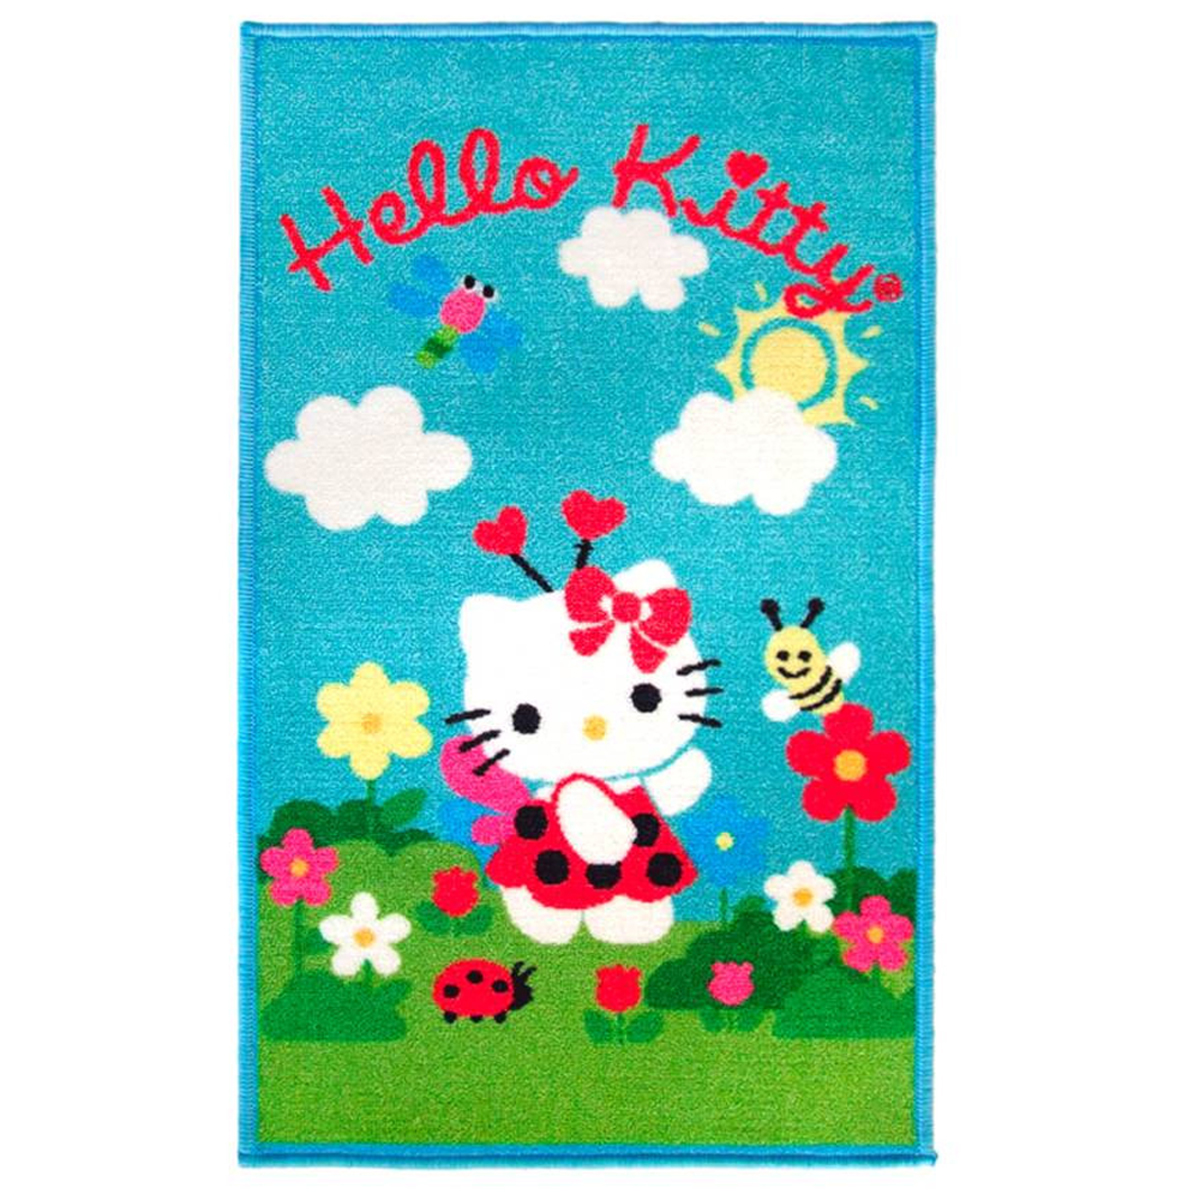 Tapis créateur \'Hello Kitty\' turquoise multicolore - 80x50 cm - [A2030]